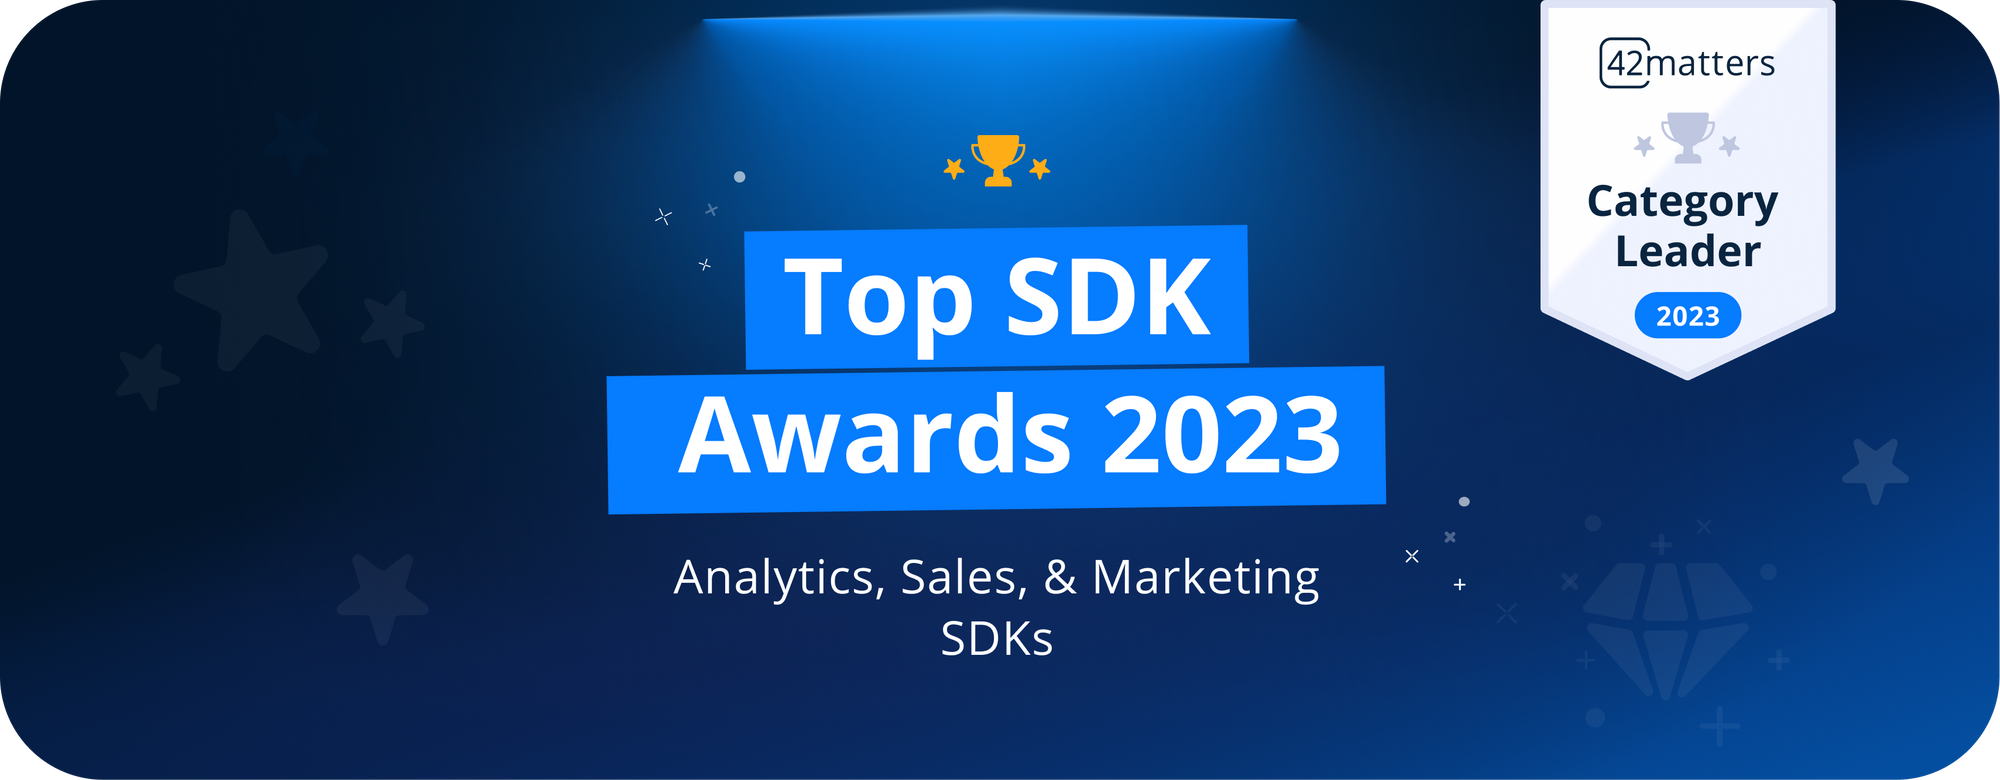 Top SDK Awards 2023: Analytics, Sales, & Marketing SDKs